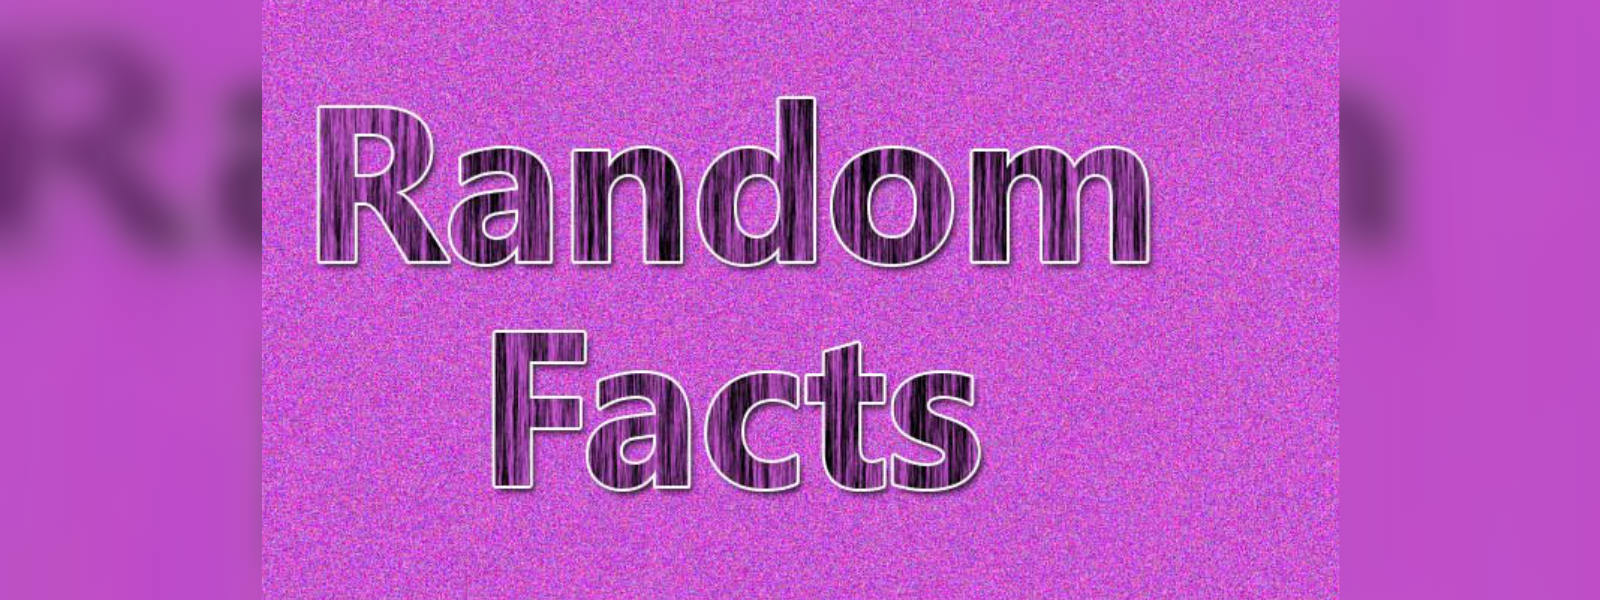 Weird and random facts to kill your boredom 